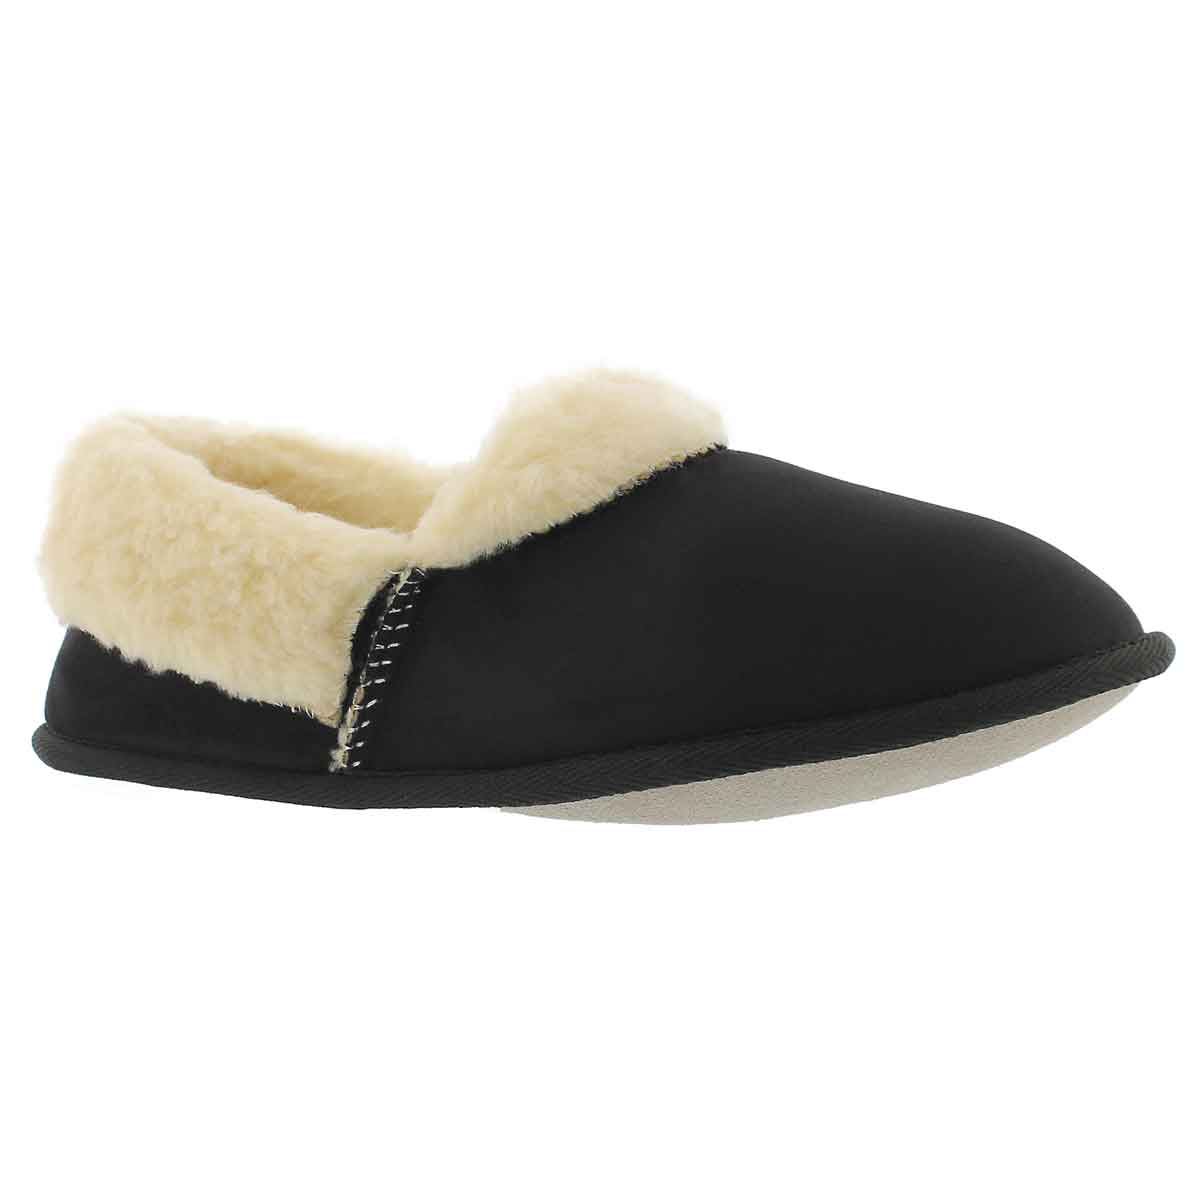 softmoc sorel slippers